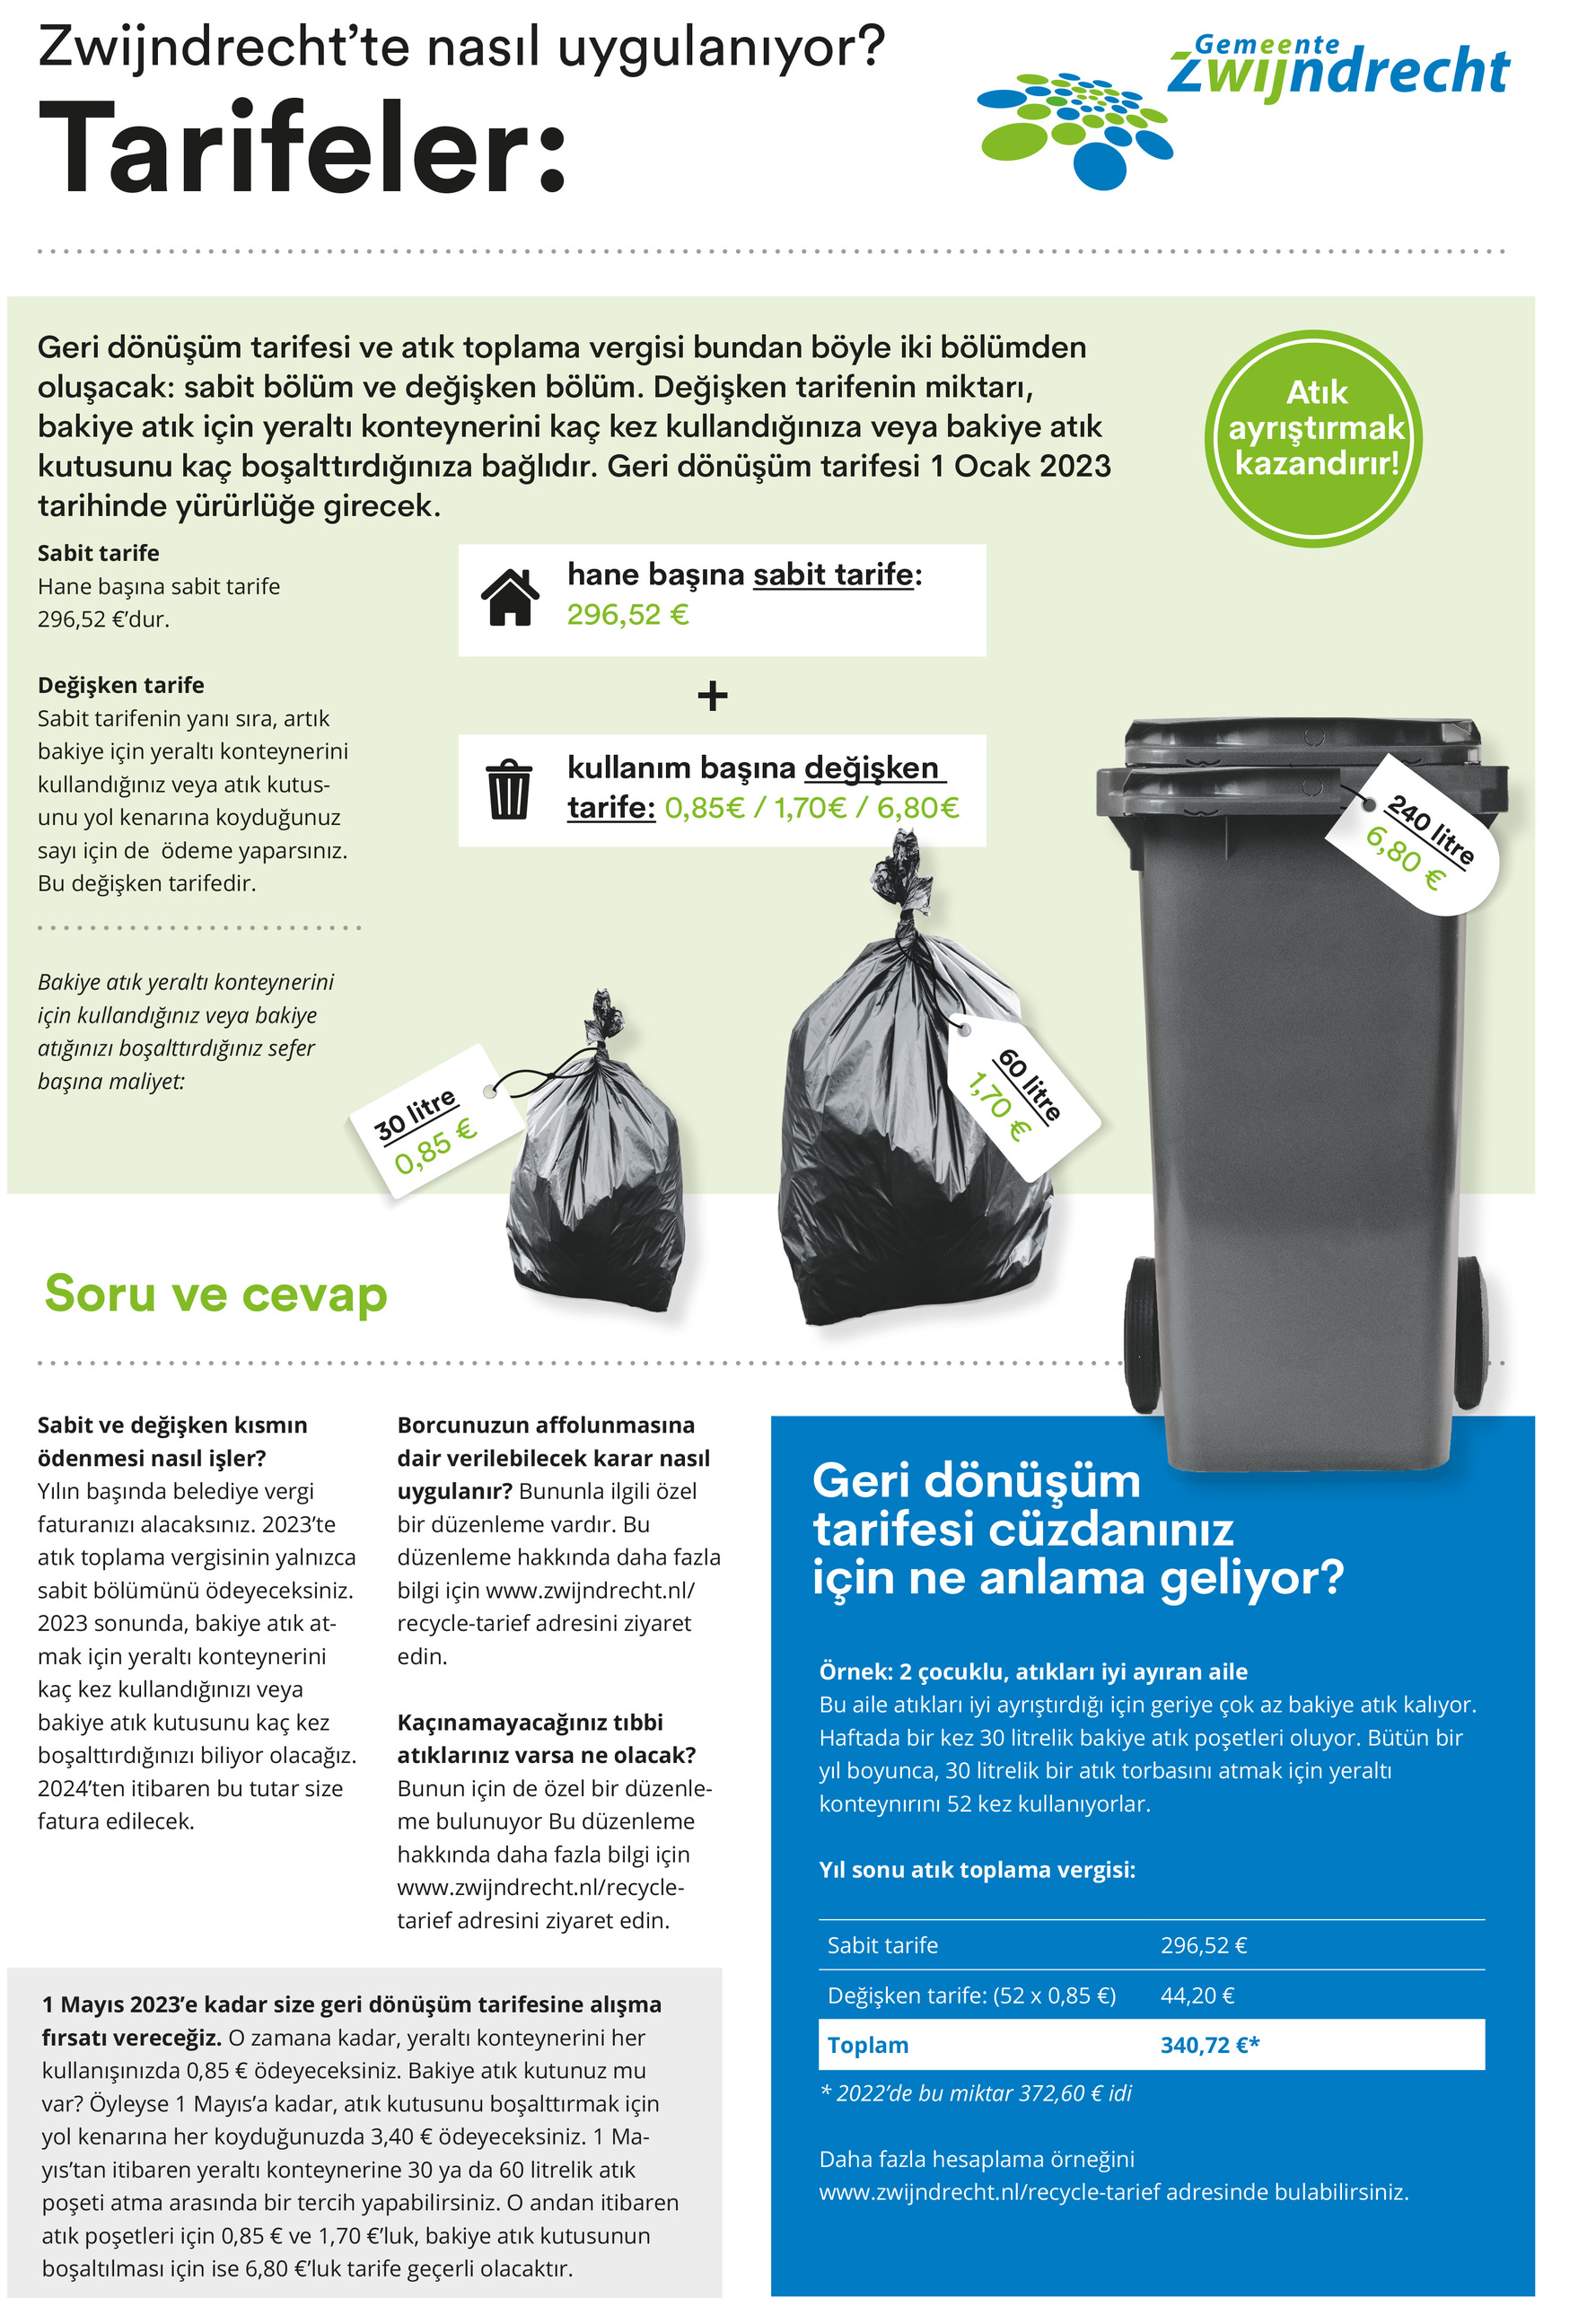 Recycle-tarieven Turks